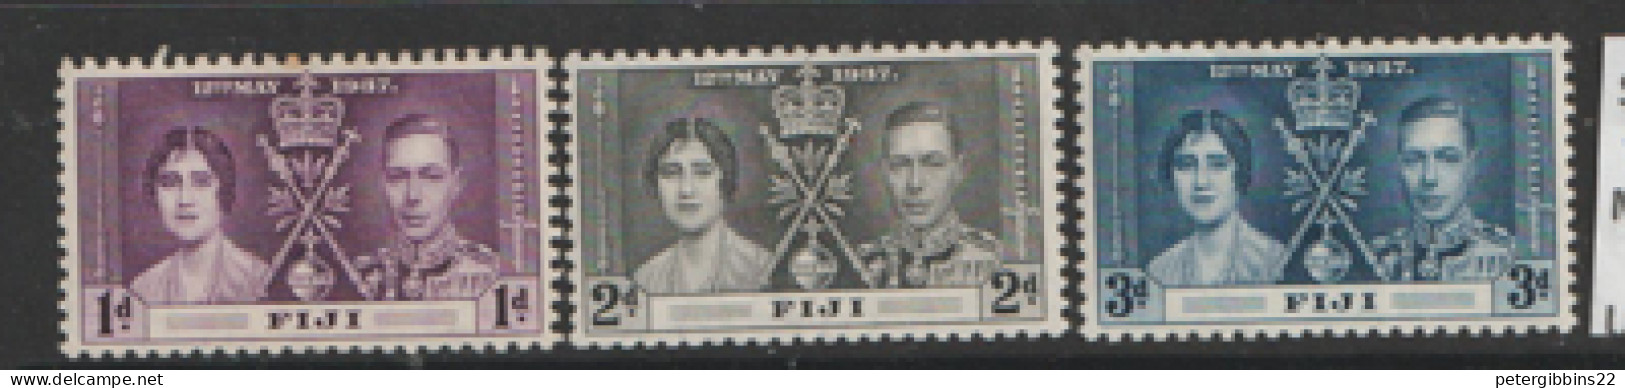 Fiji  1937  SG 246-8  Coronation  Mounted Mint - Fiji (...-1970)